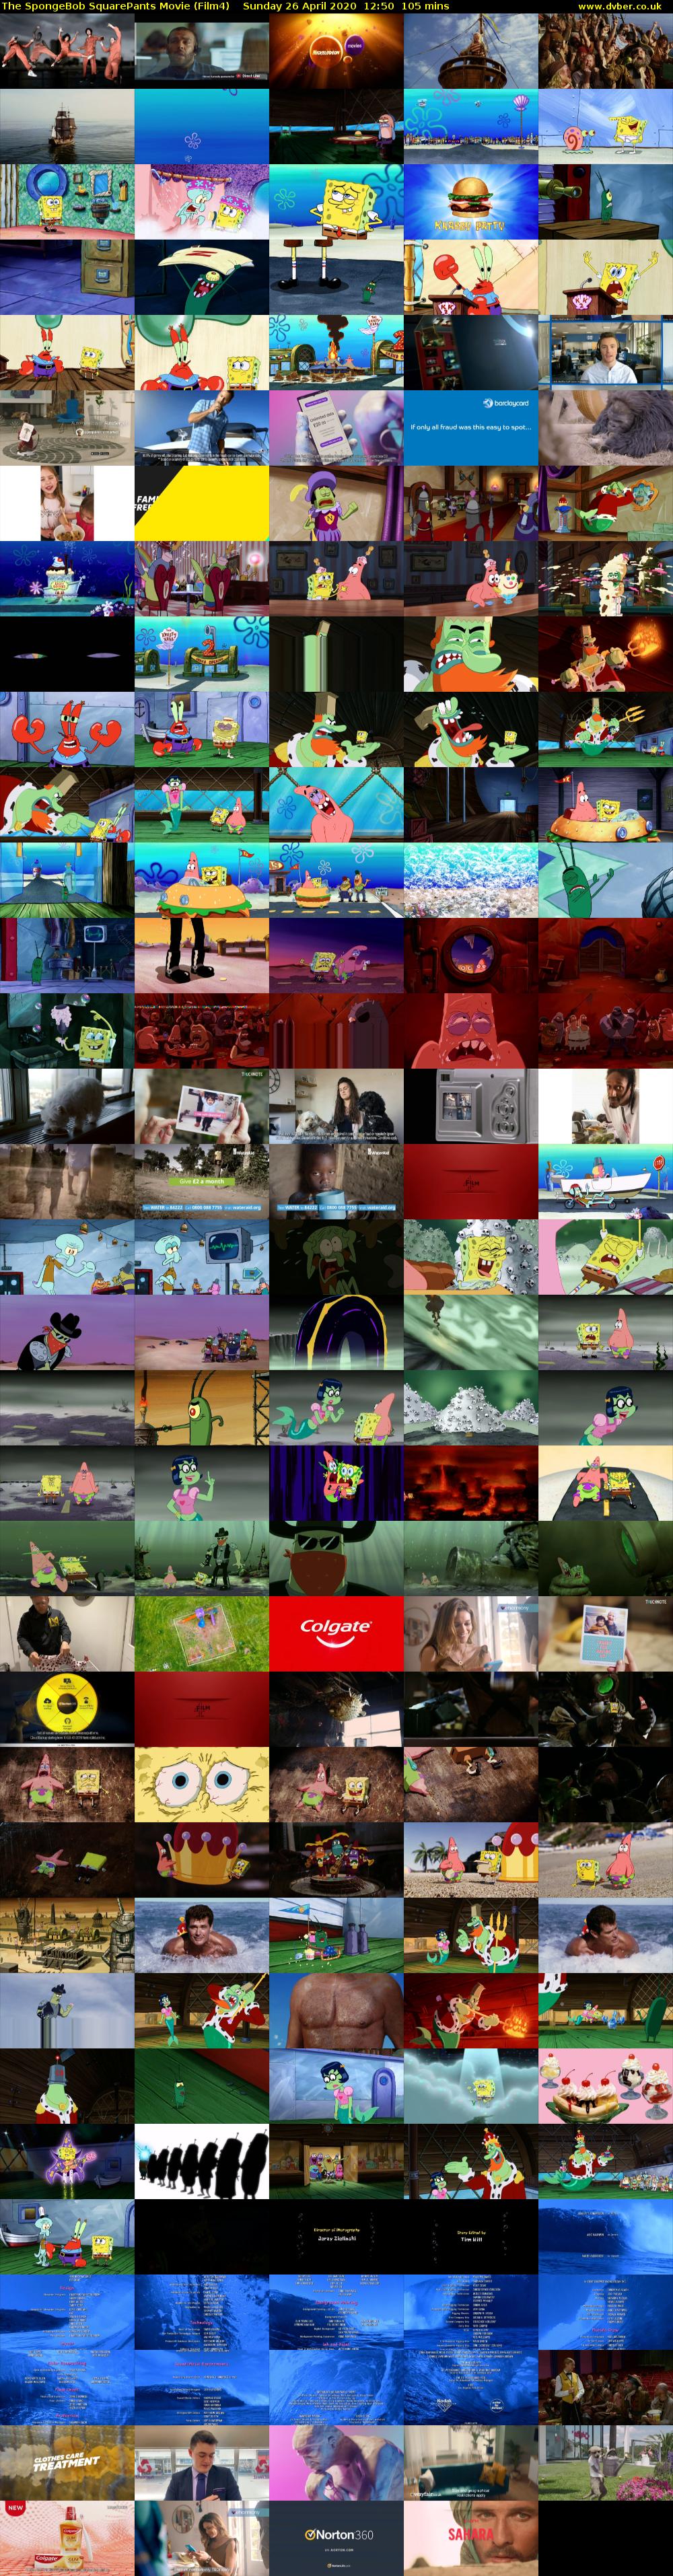 The SpongeBob SquarePants Movie (Film4) Sunday 26 April 2020 12:50 - 14:35